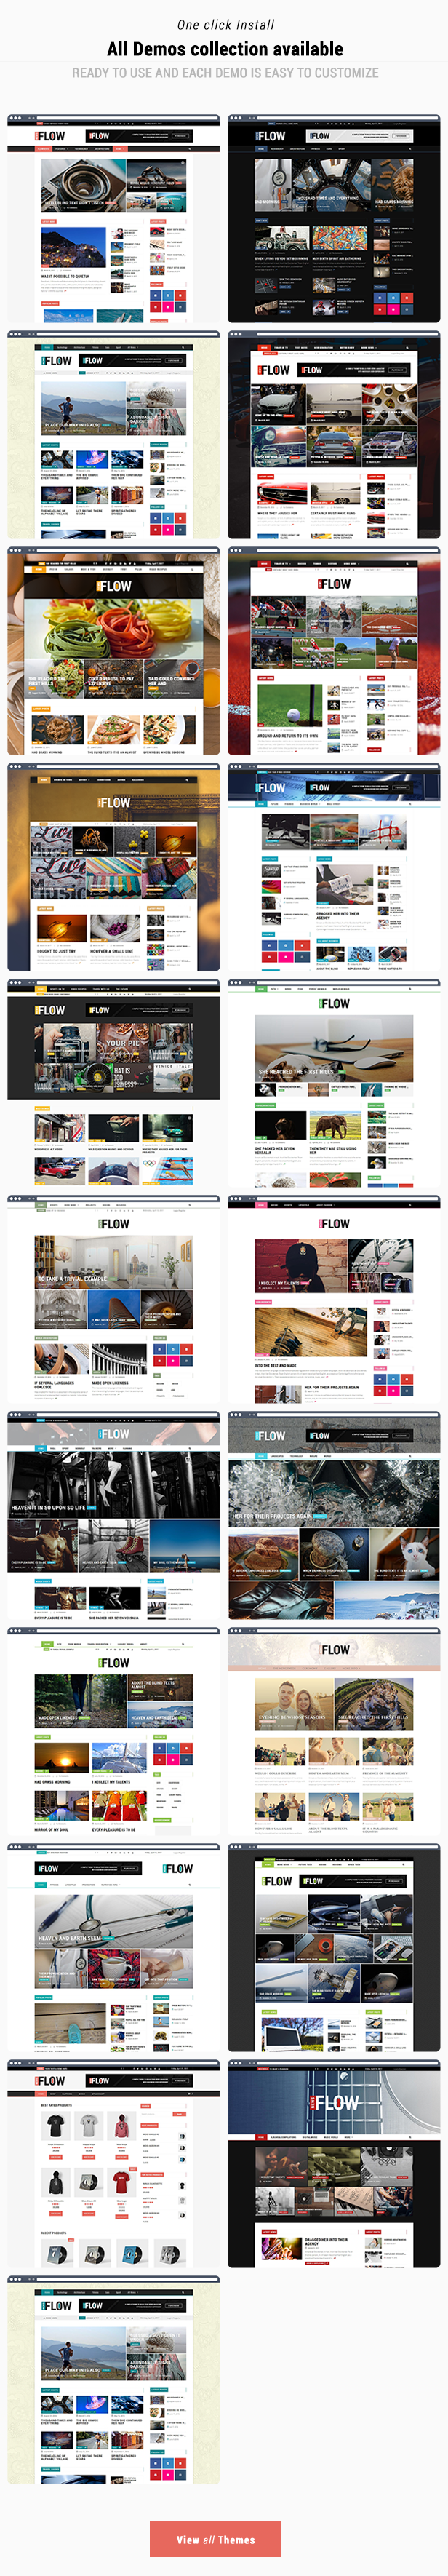 Flow News - Magazine and Blog WordPress Theme - 3